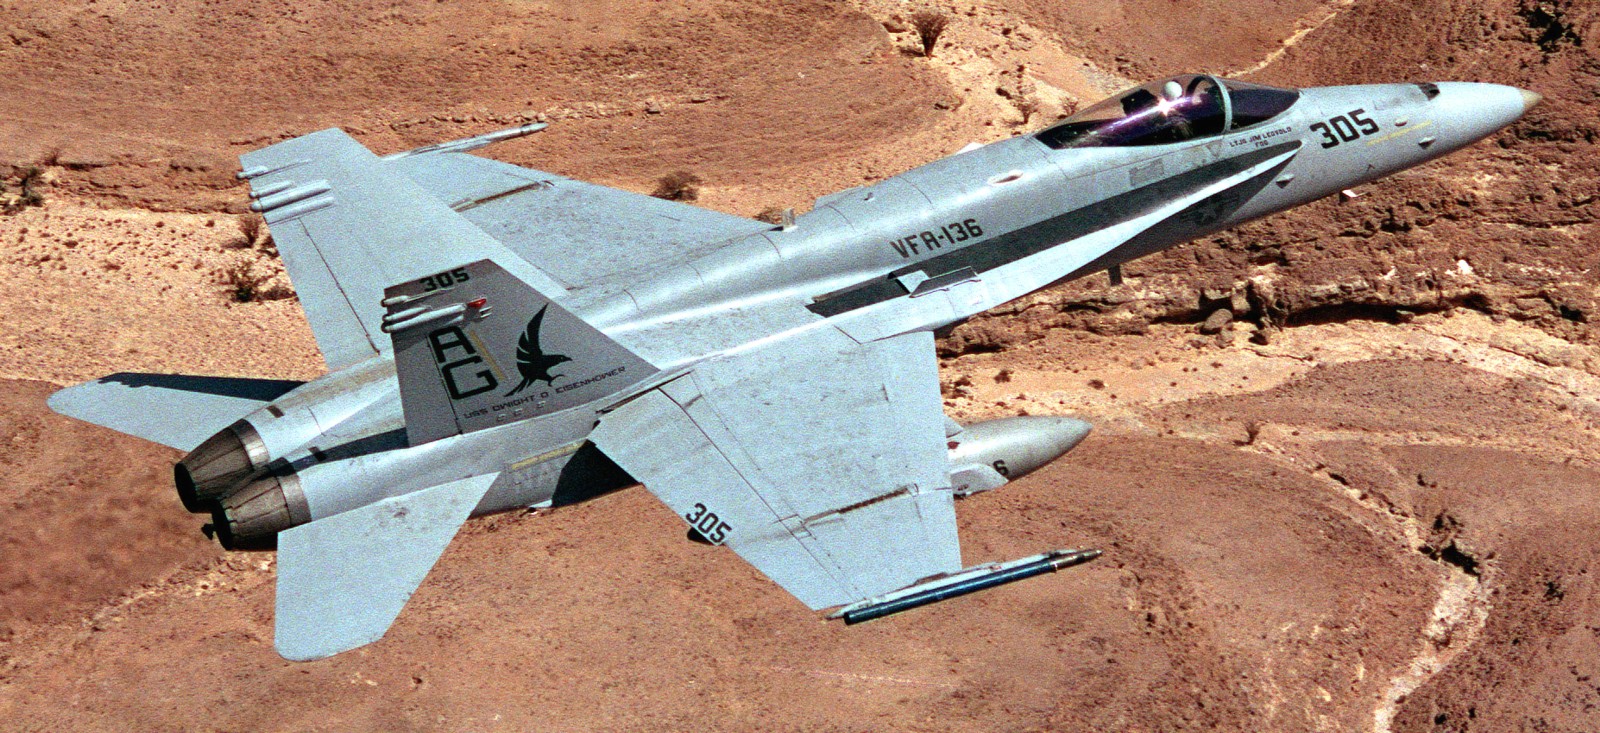 vfa-136 knighthawks strike fighter squadron f/a-18c hornet 1992 84 cvw-7 uss dwight d. eisenhower cvn-69